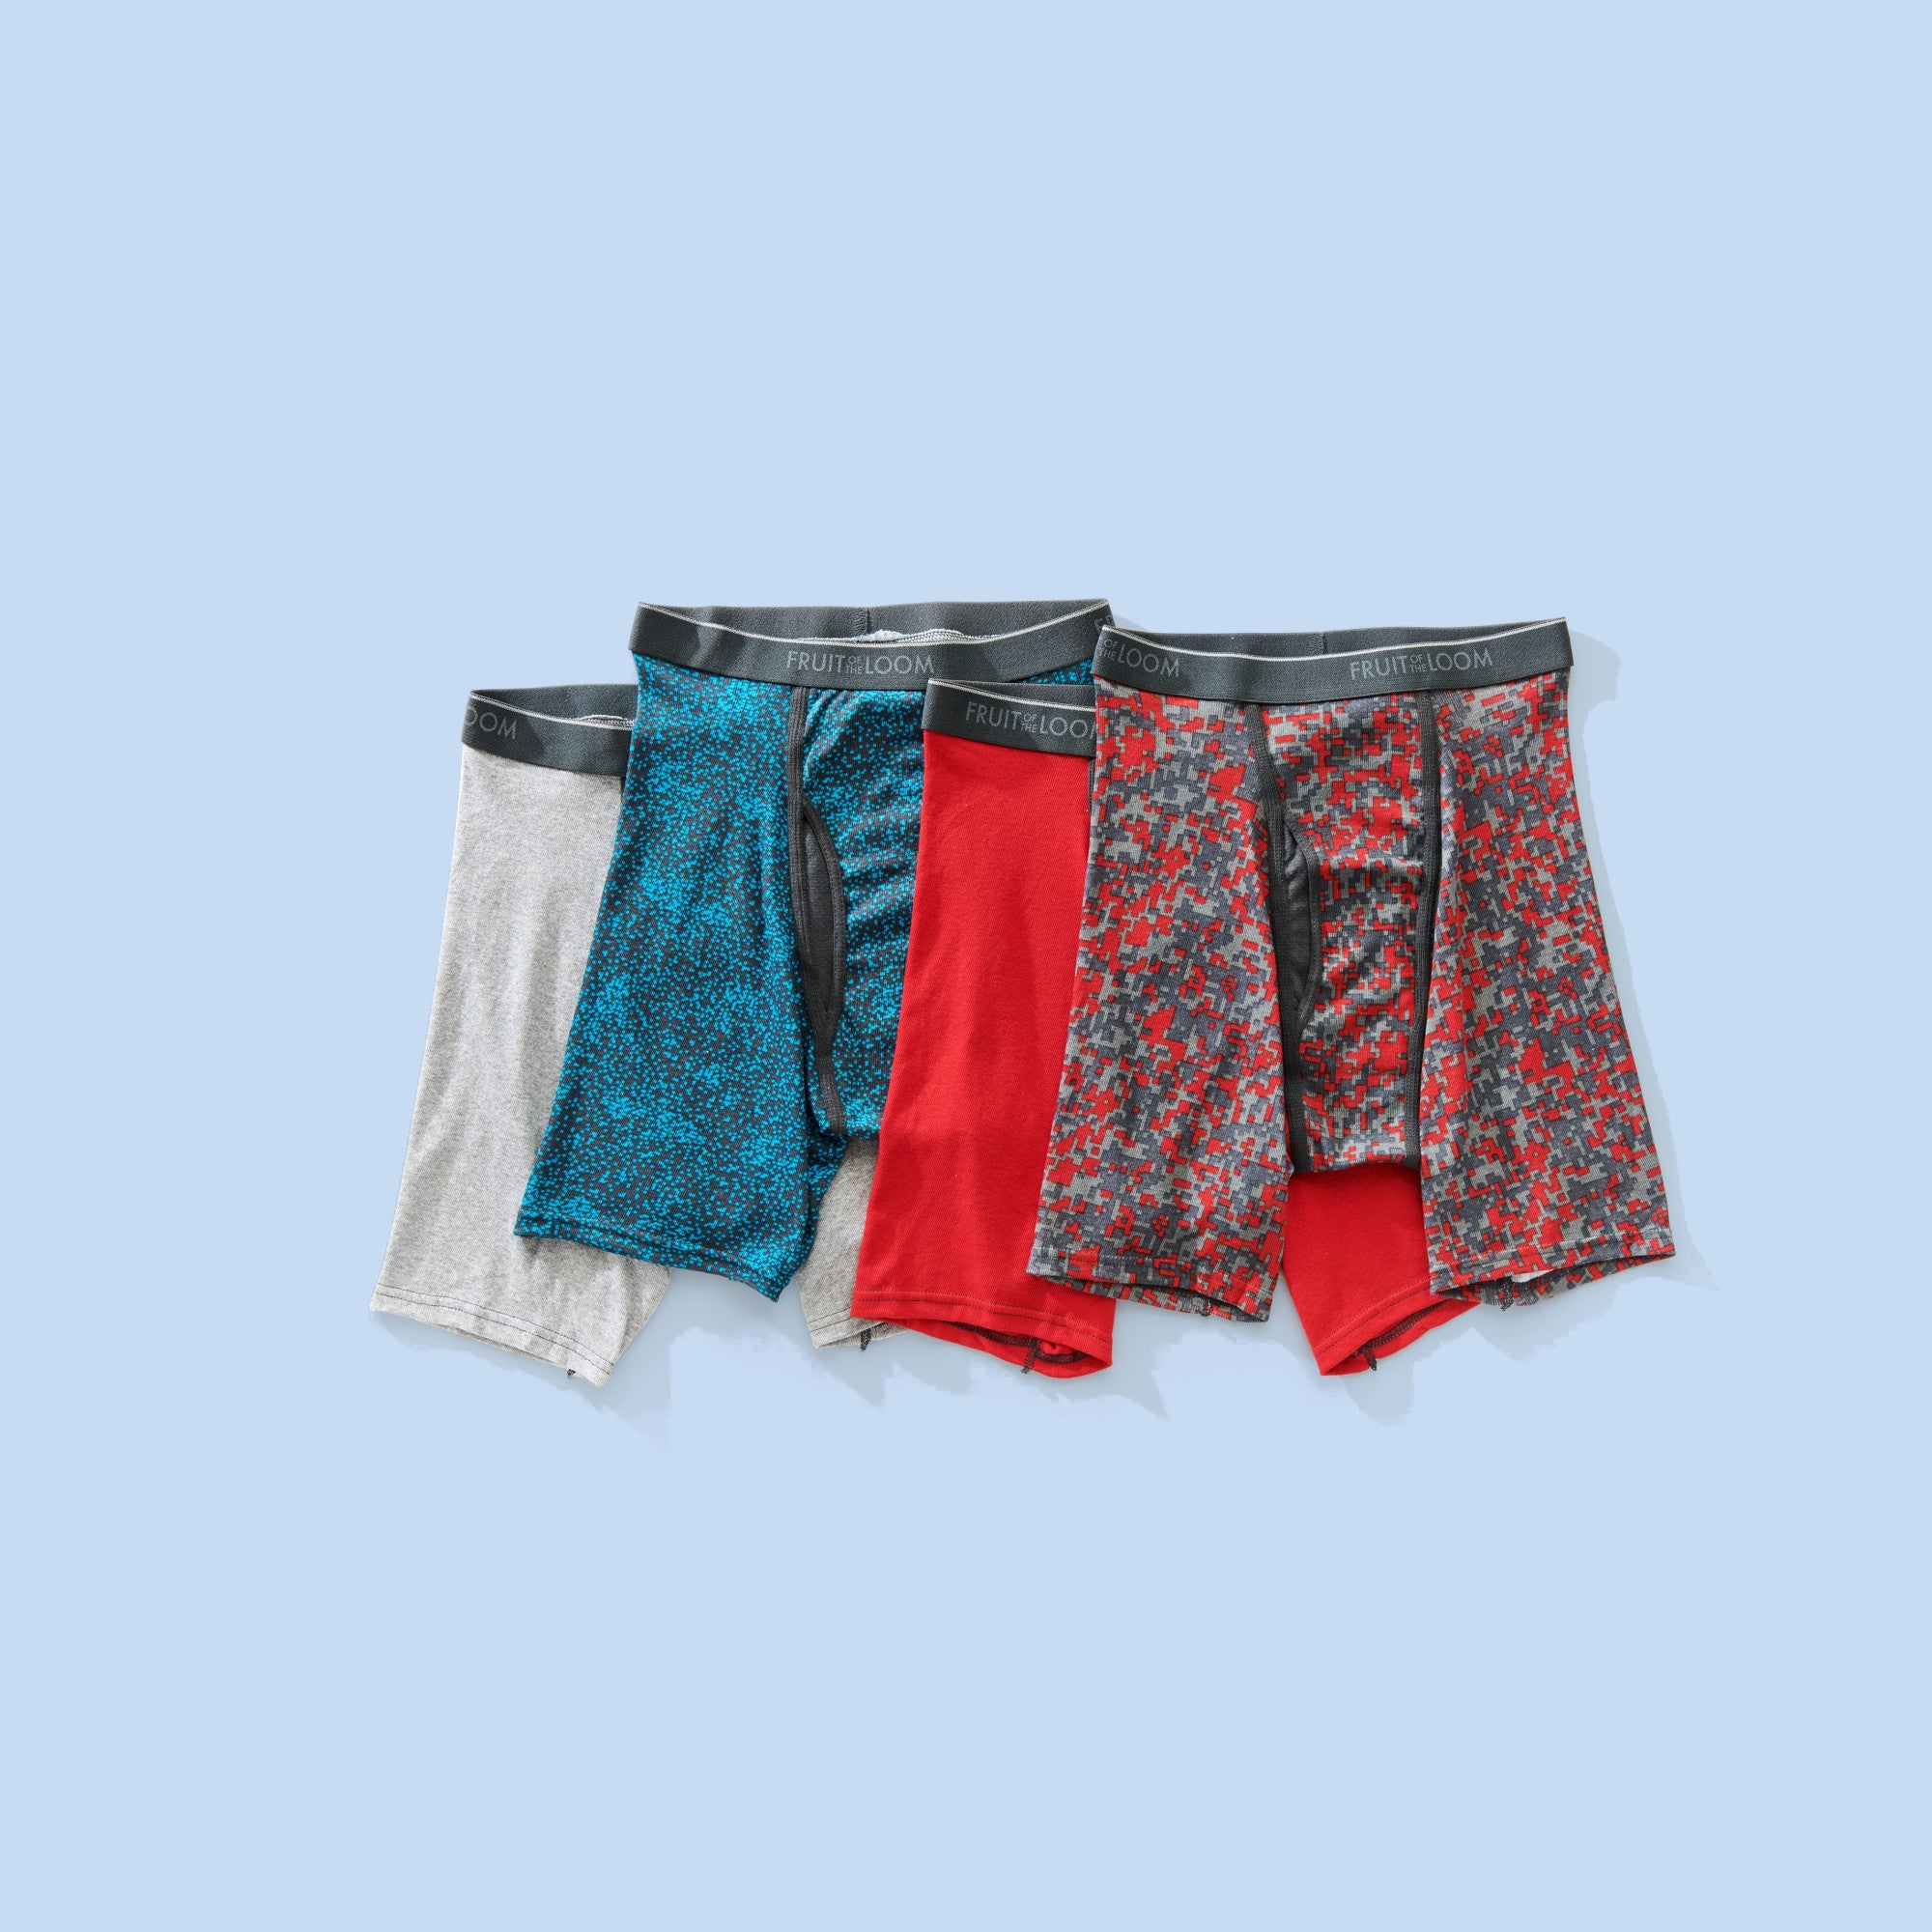 Hanes Men's Comfort Cool Boxer Briefs, 3-Pack – Giant Tiger